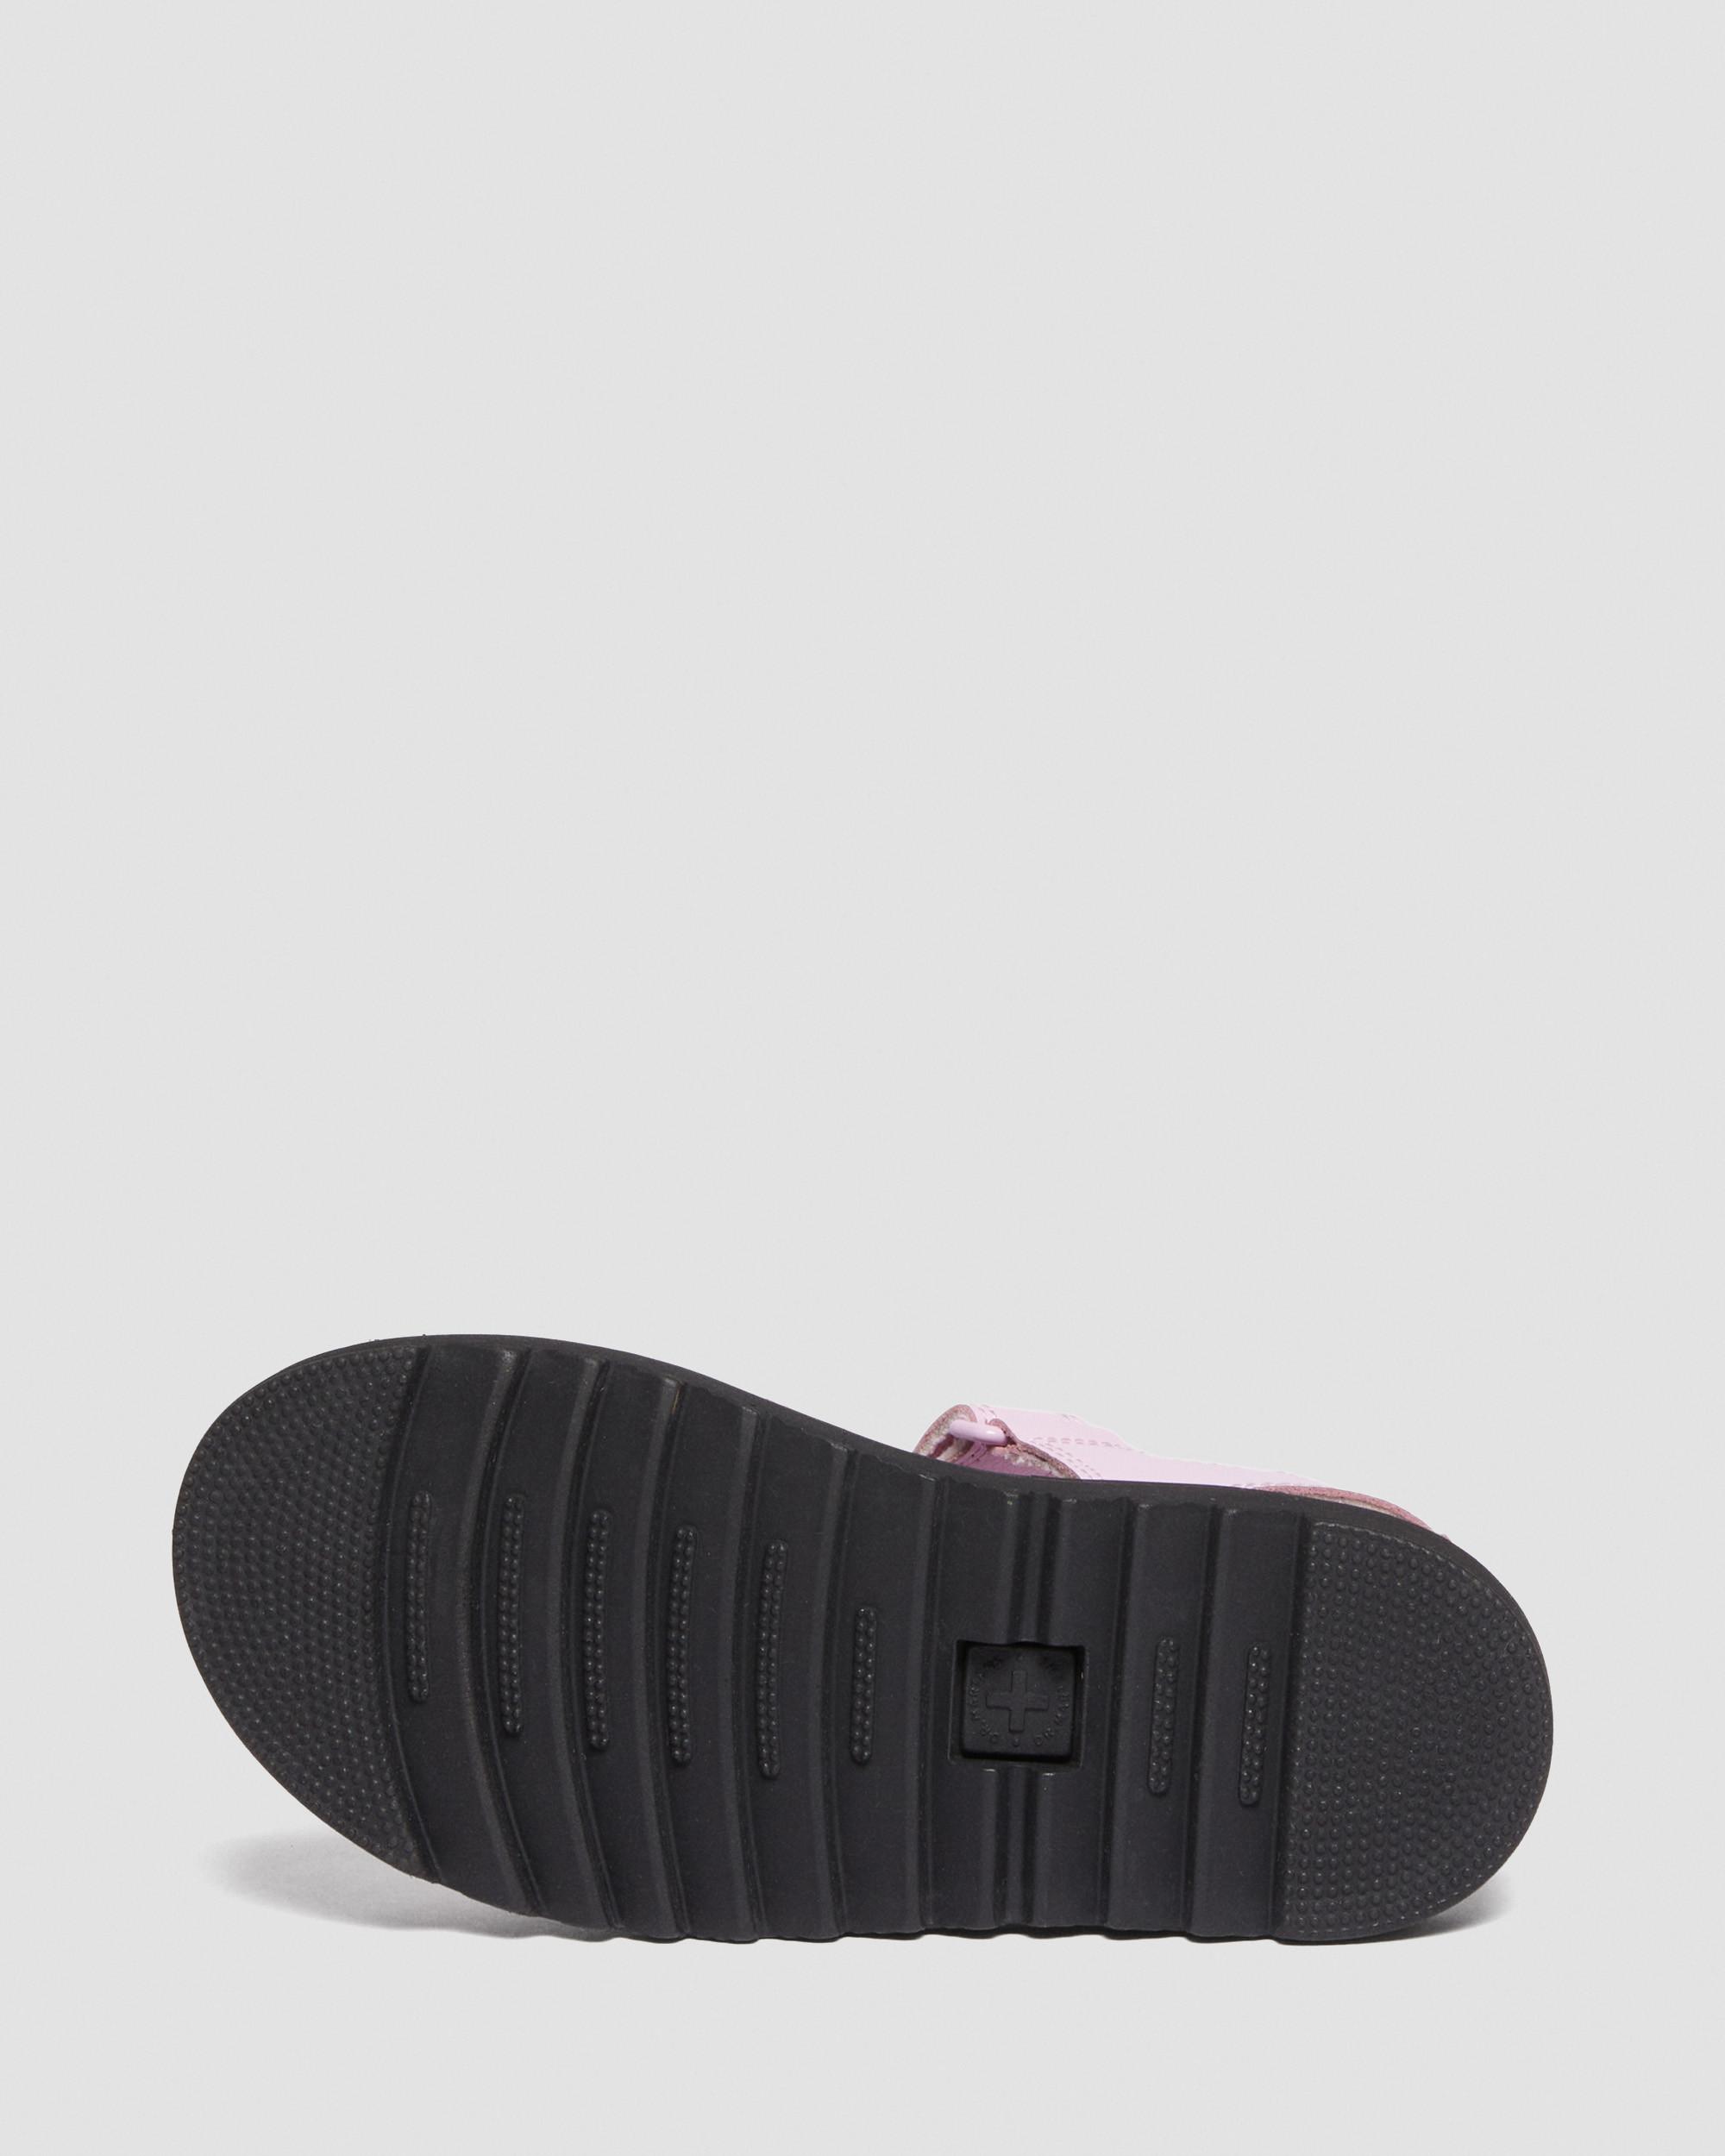 Junior Klaire Athena Leather Strap Velcro Sandals in Pale Pink